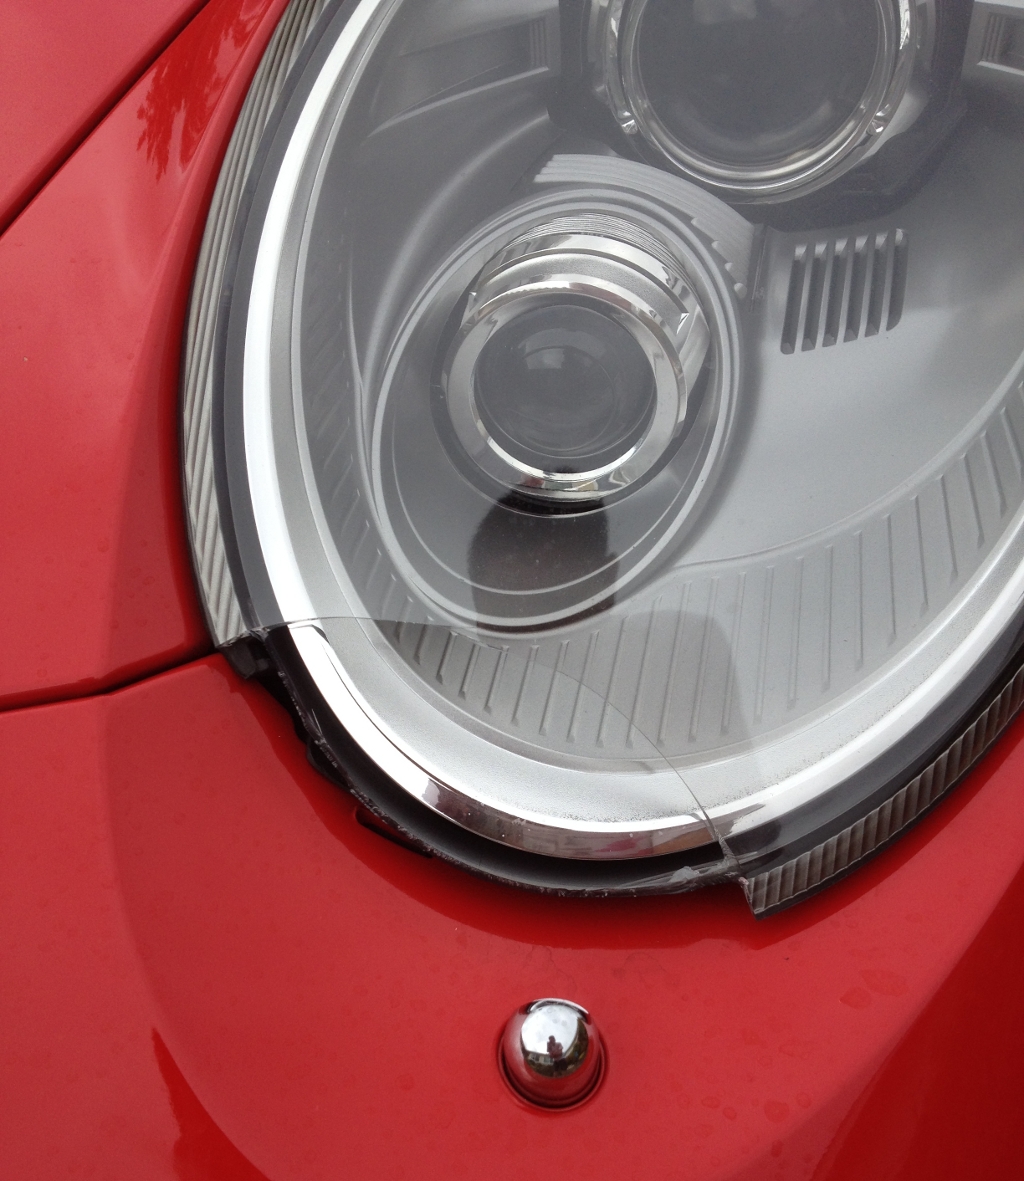 Replacing cracked headlight lens - Rennlist - Porsche Discussion Forums